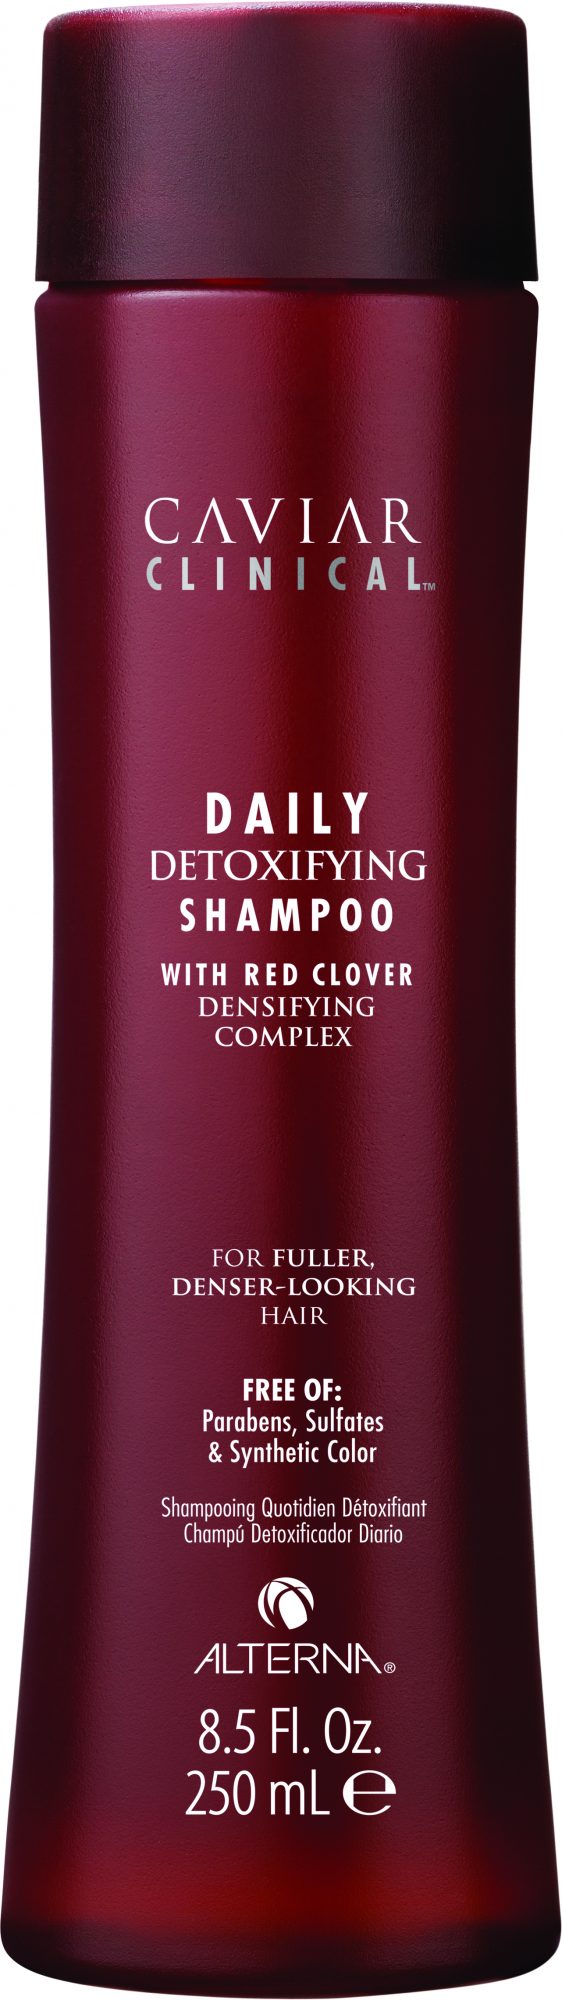 clarifying-shampoo-alterna.jpg